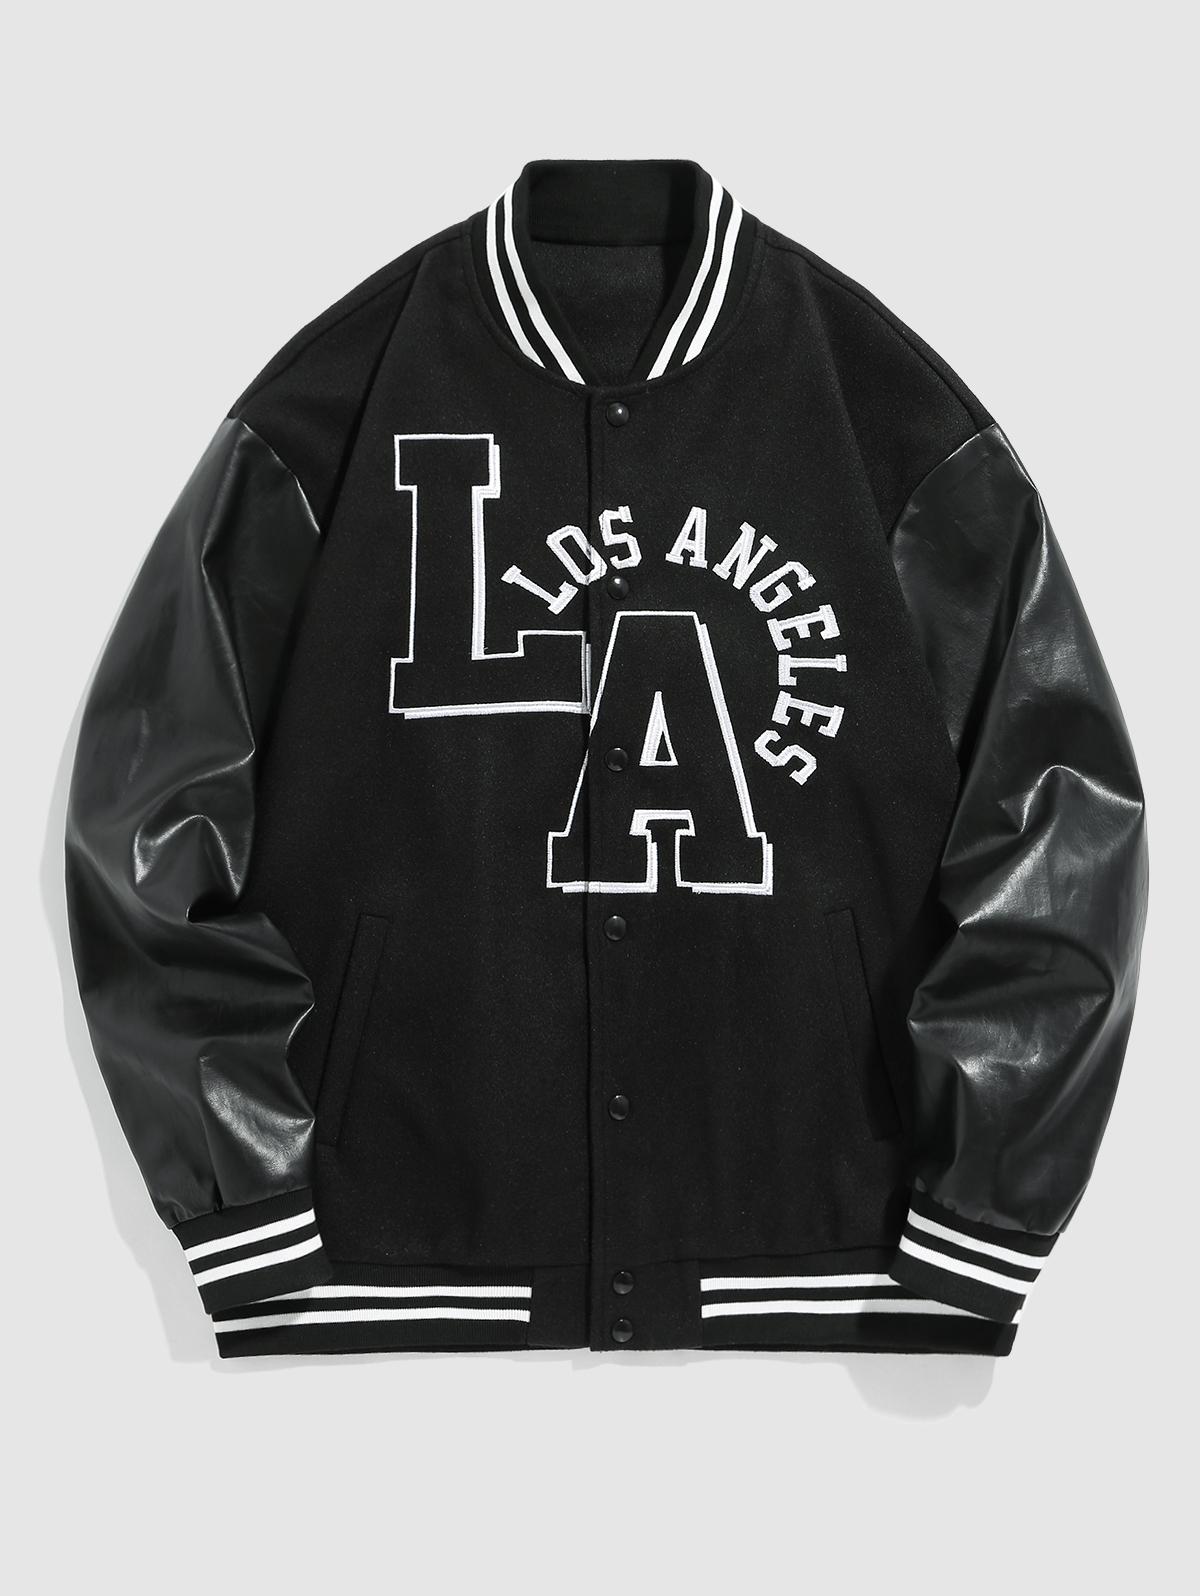 ZAFUL Men's Letter LOS ANGELES Embroidery PU Leather Spliced Baseball Varsity Jacket Xxl Black